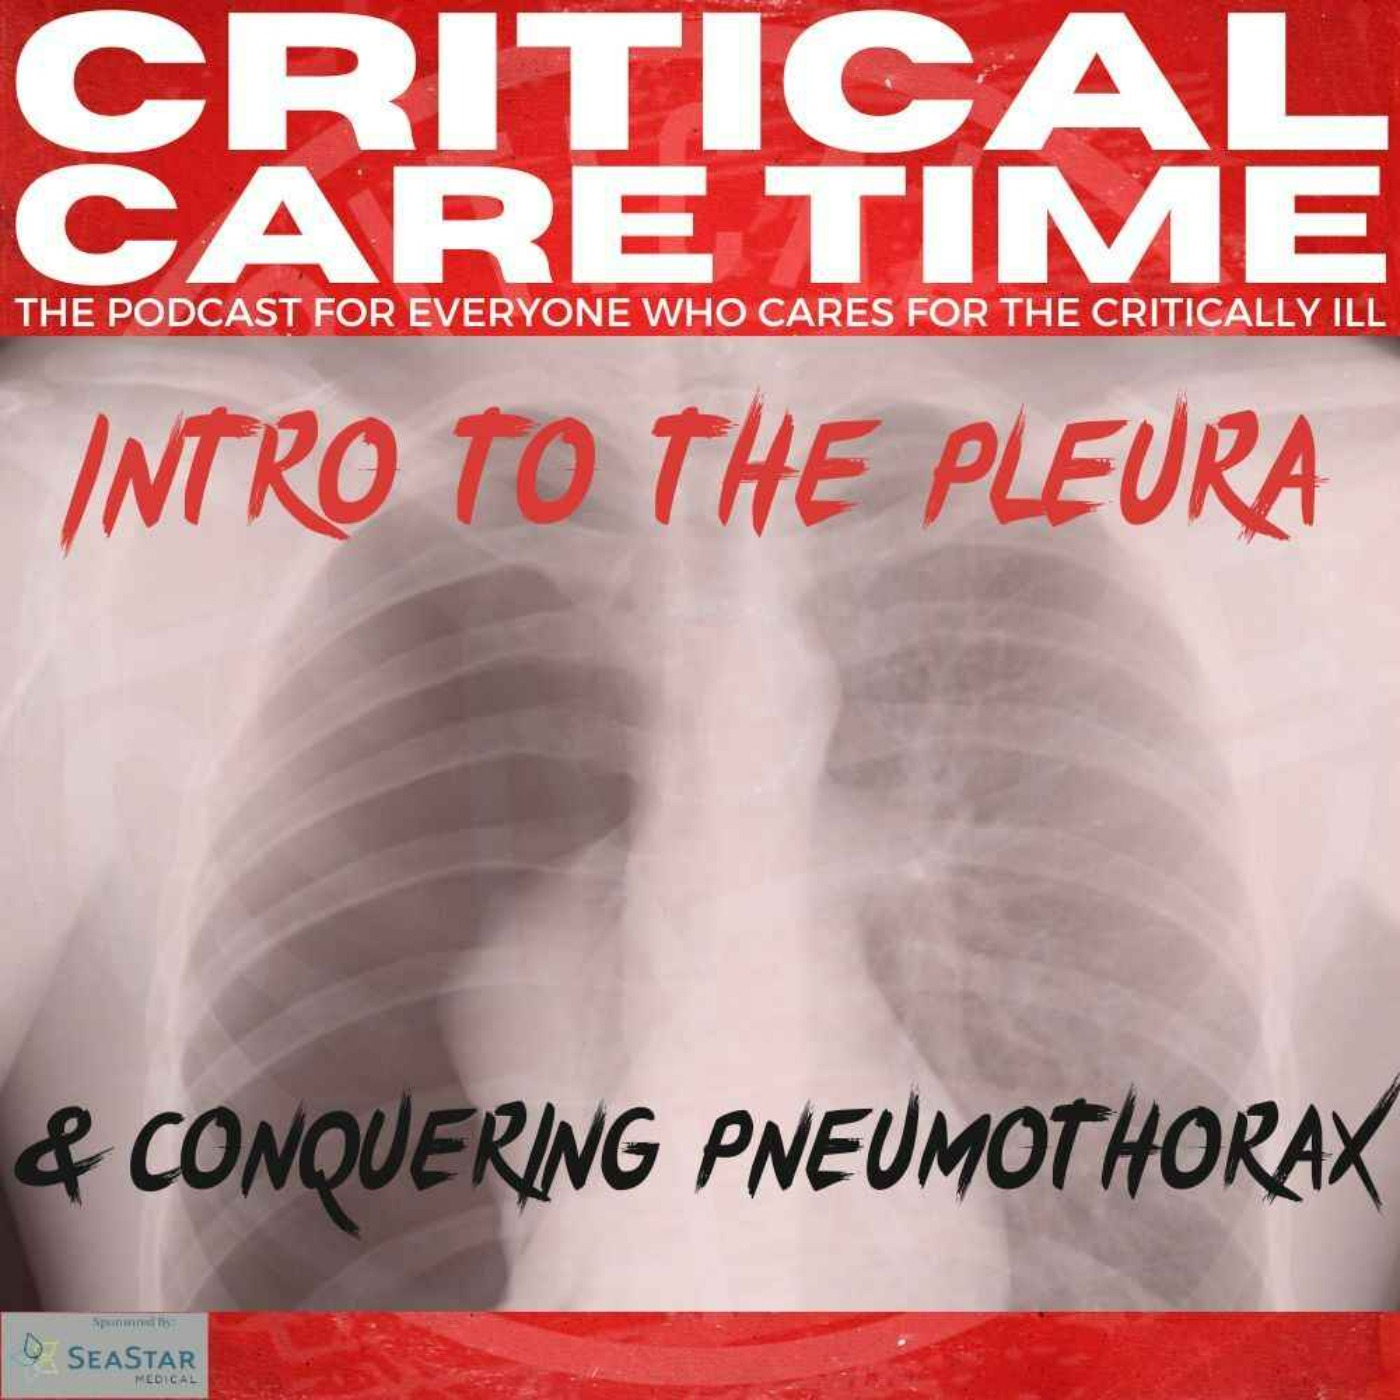 10. Intro to The Pleura & Conquering